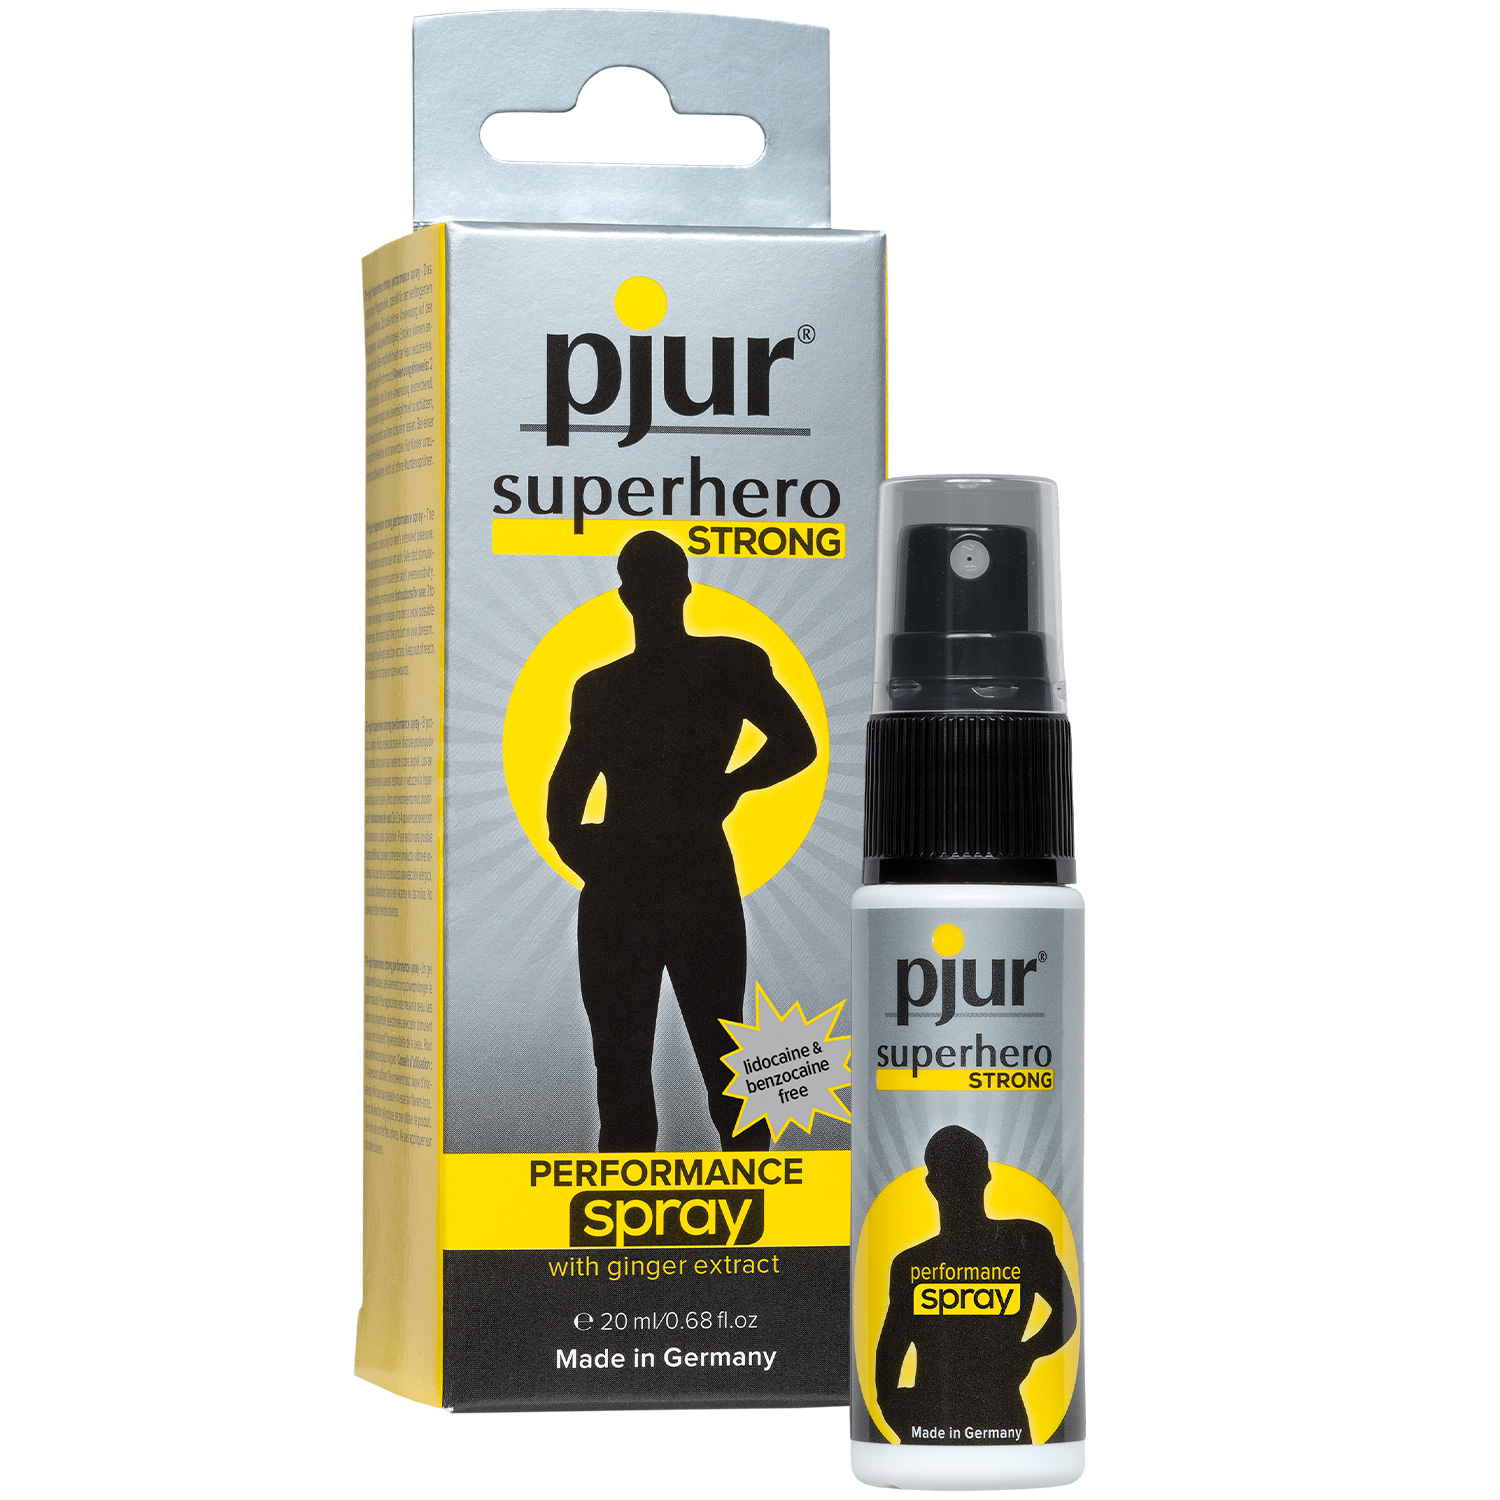 16584-pjur-superhero-strong-performance-spray-q100-01